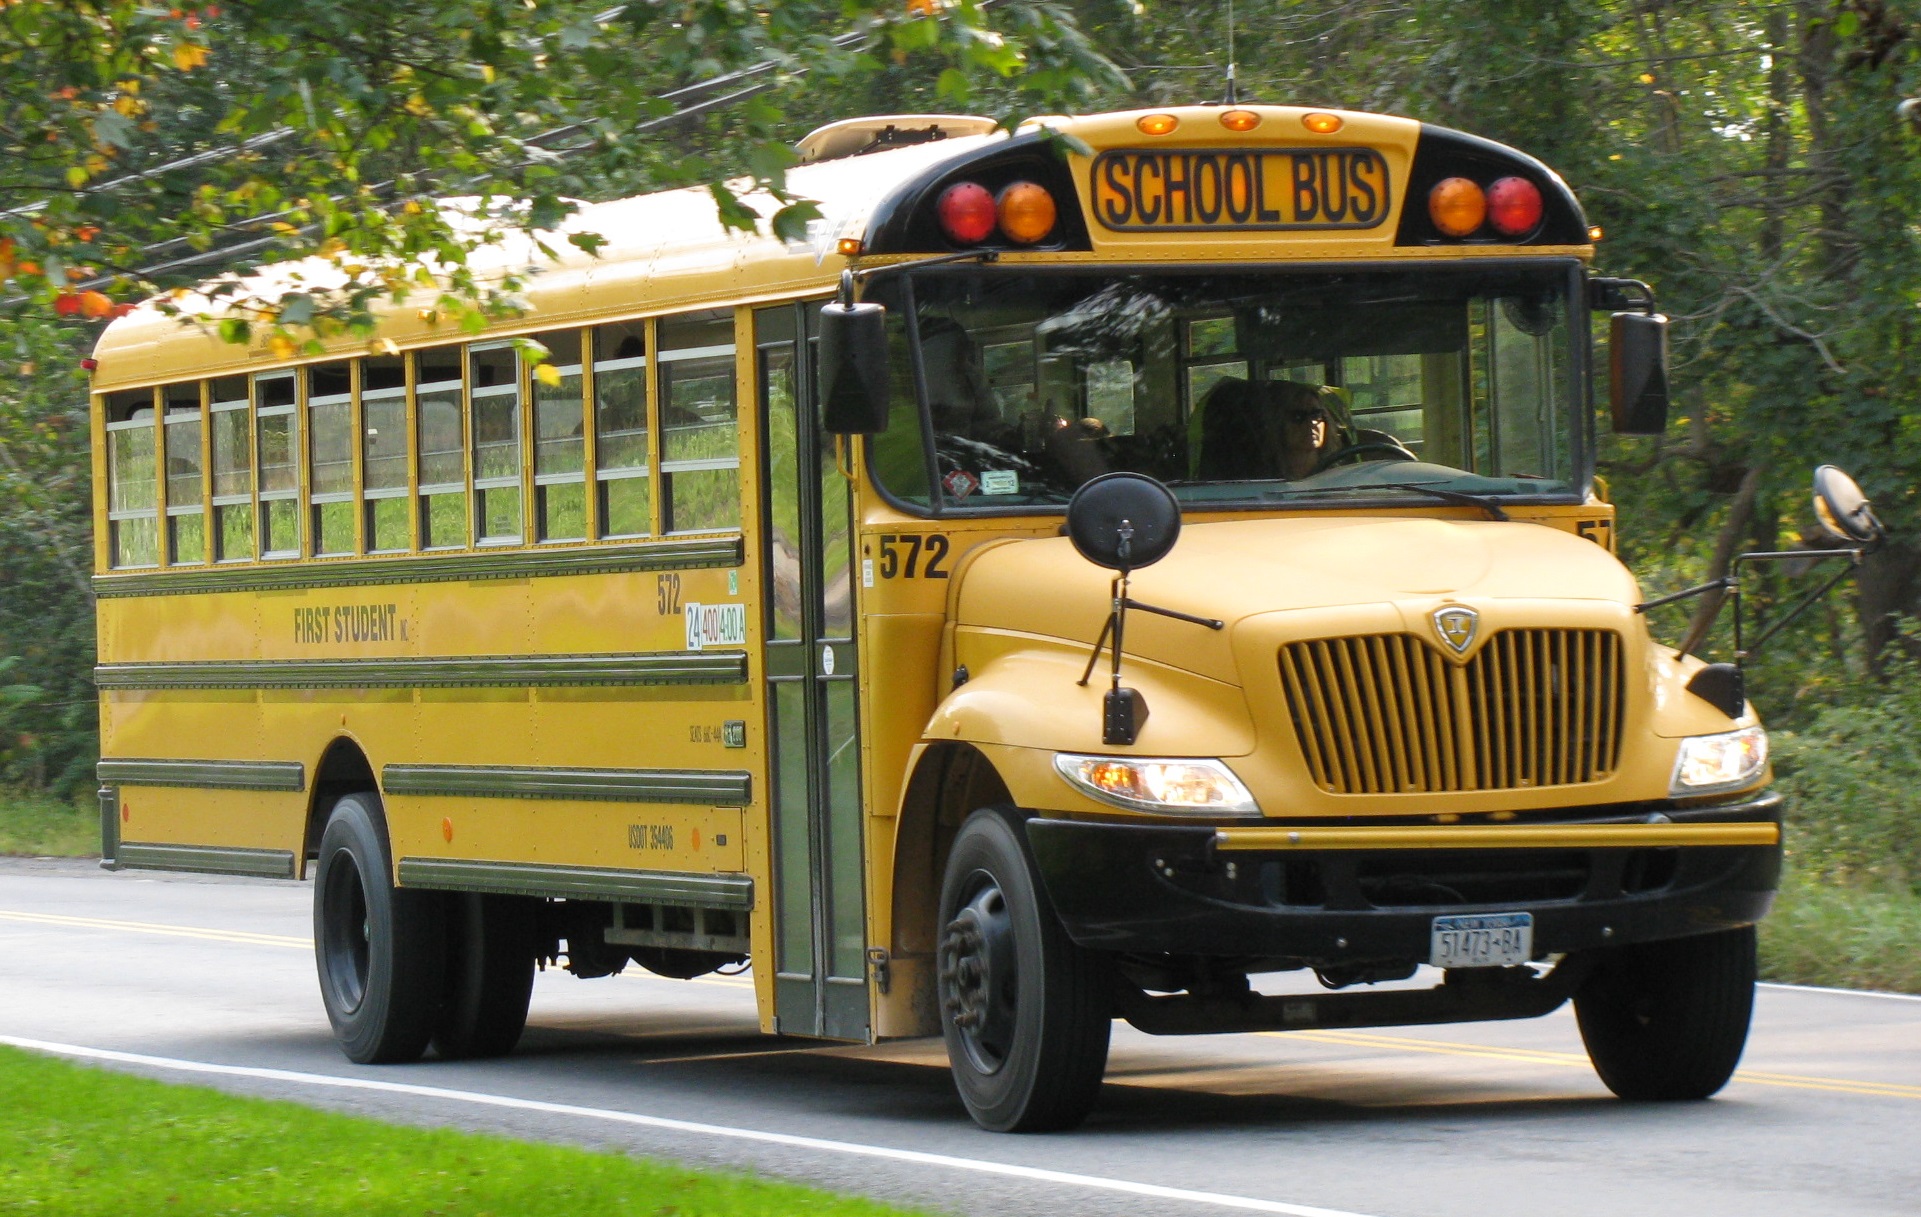 The Yellow School Bus